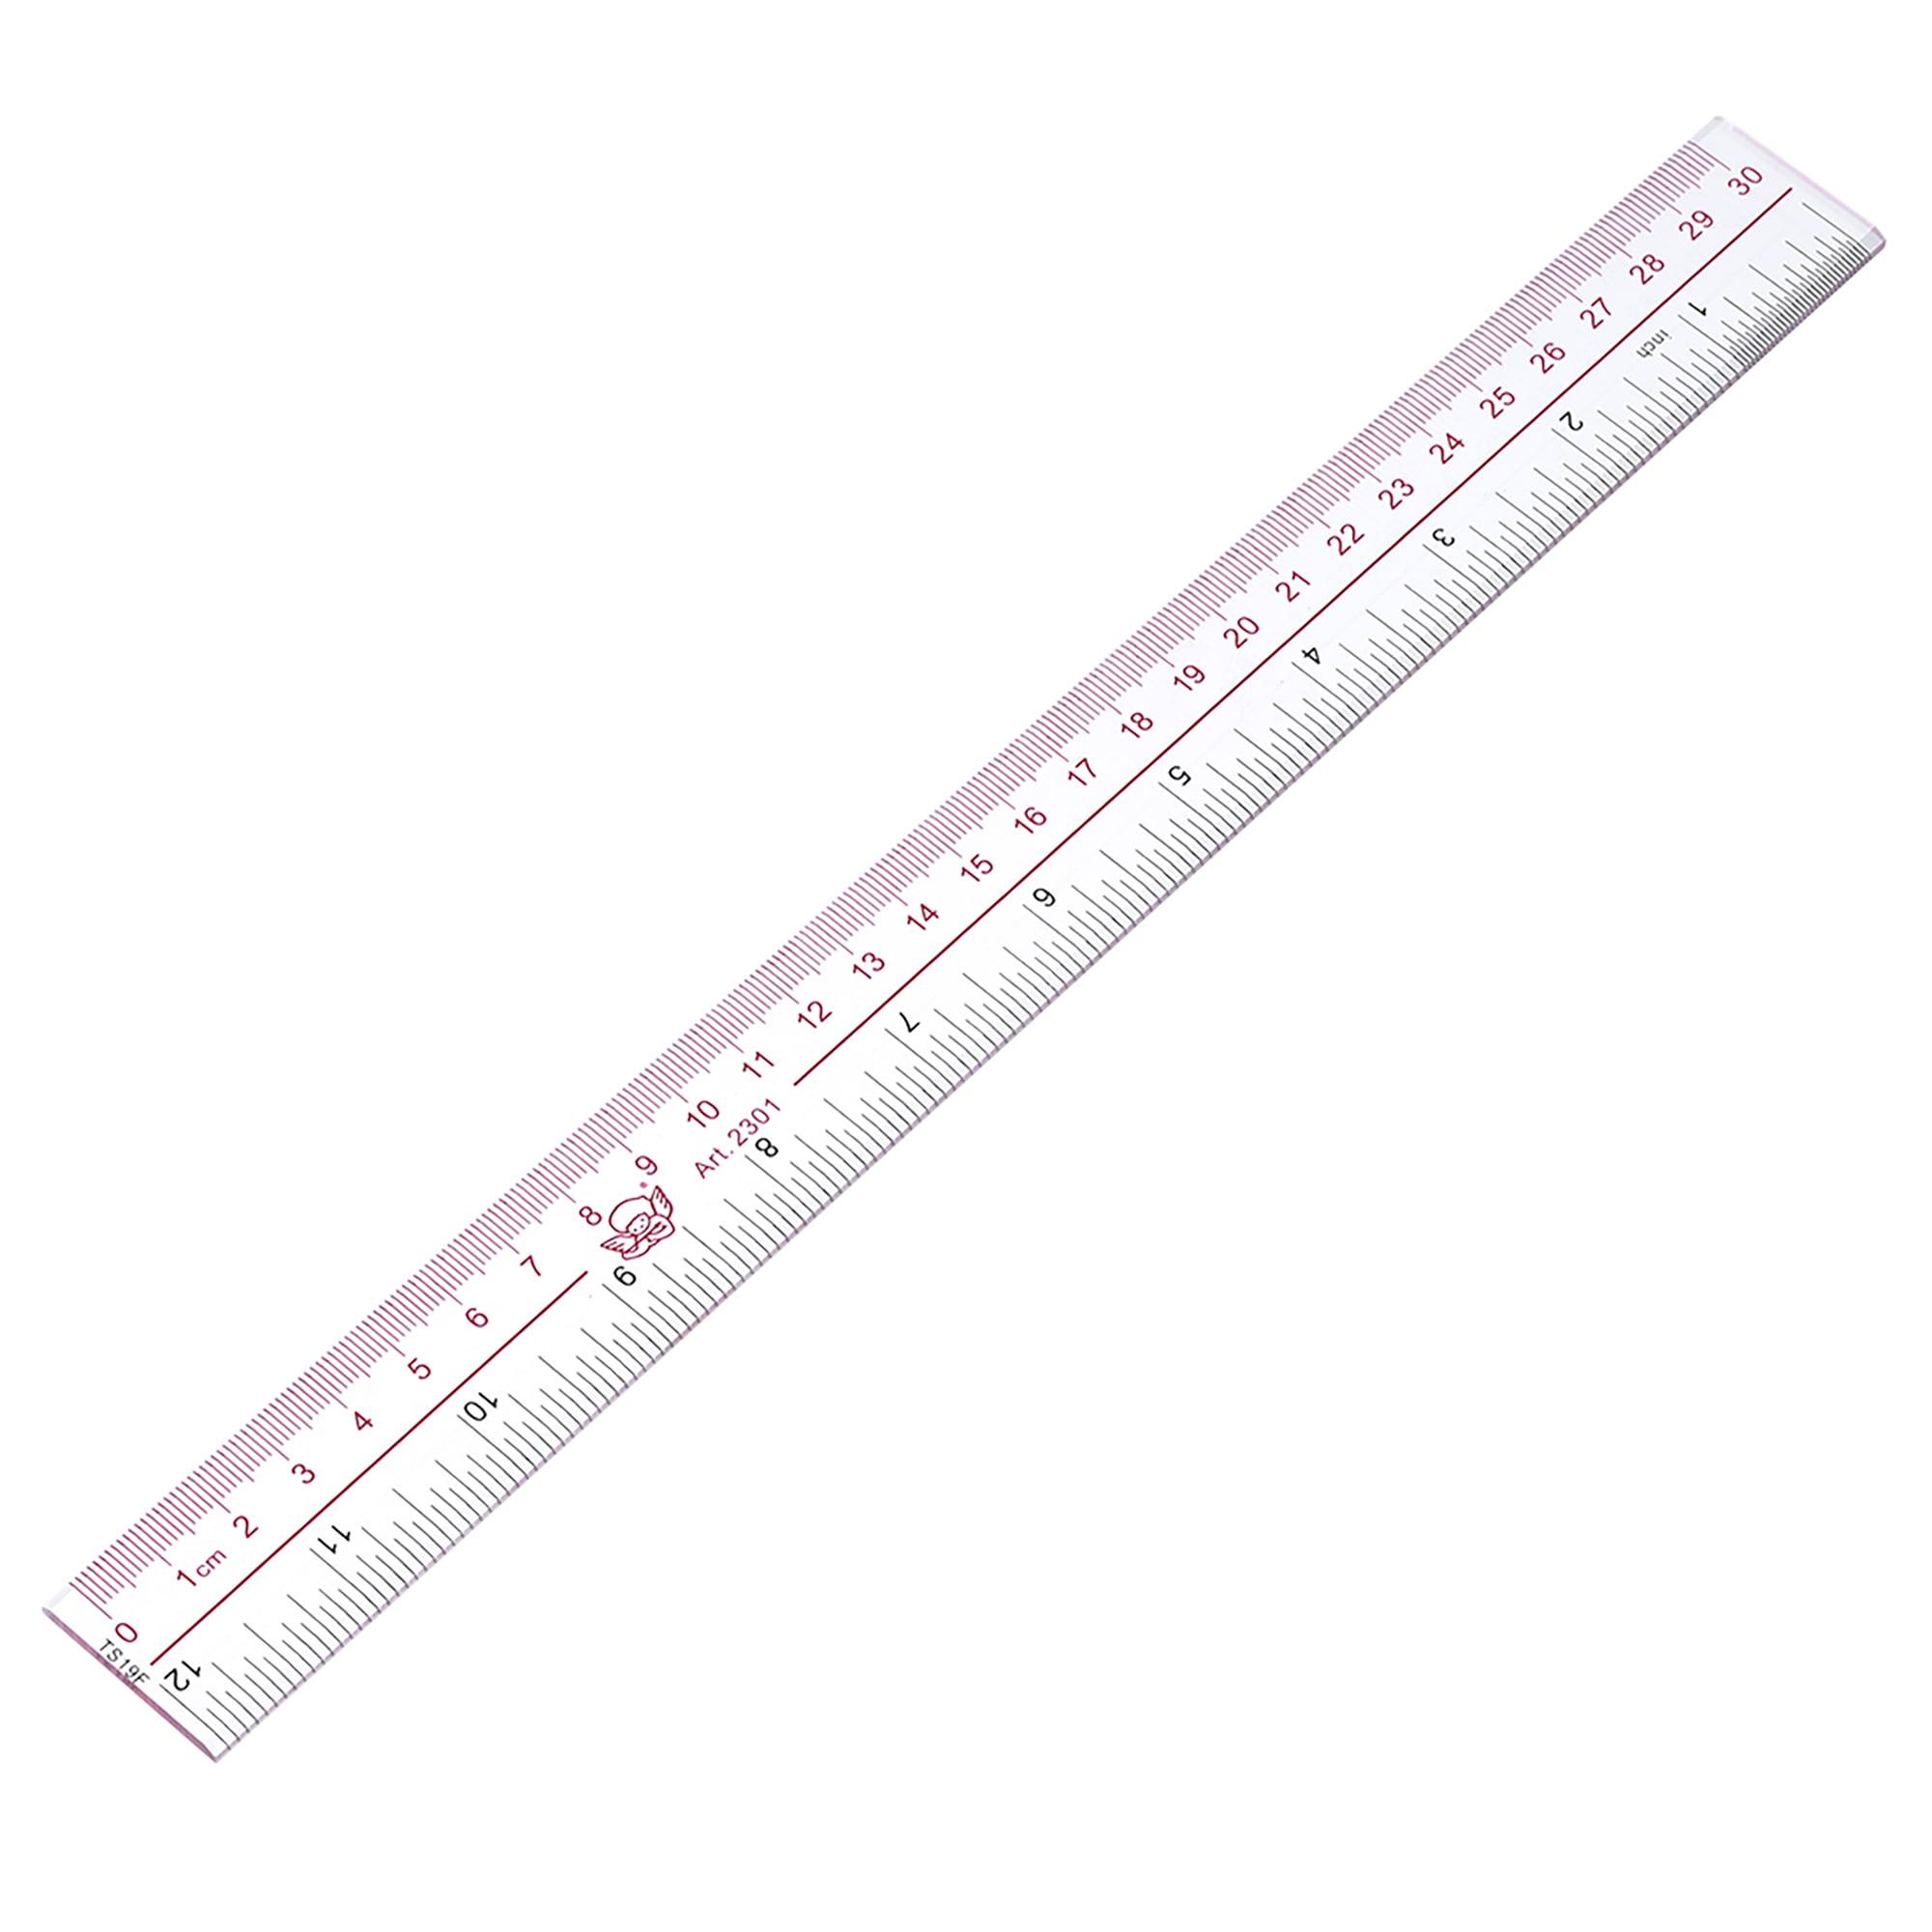 ruler scale